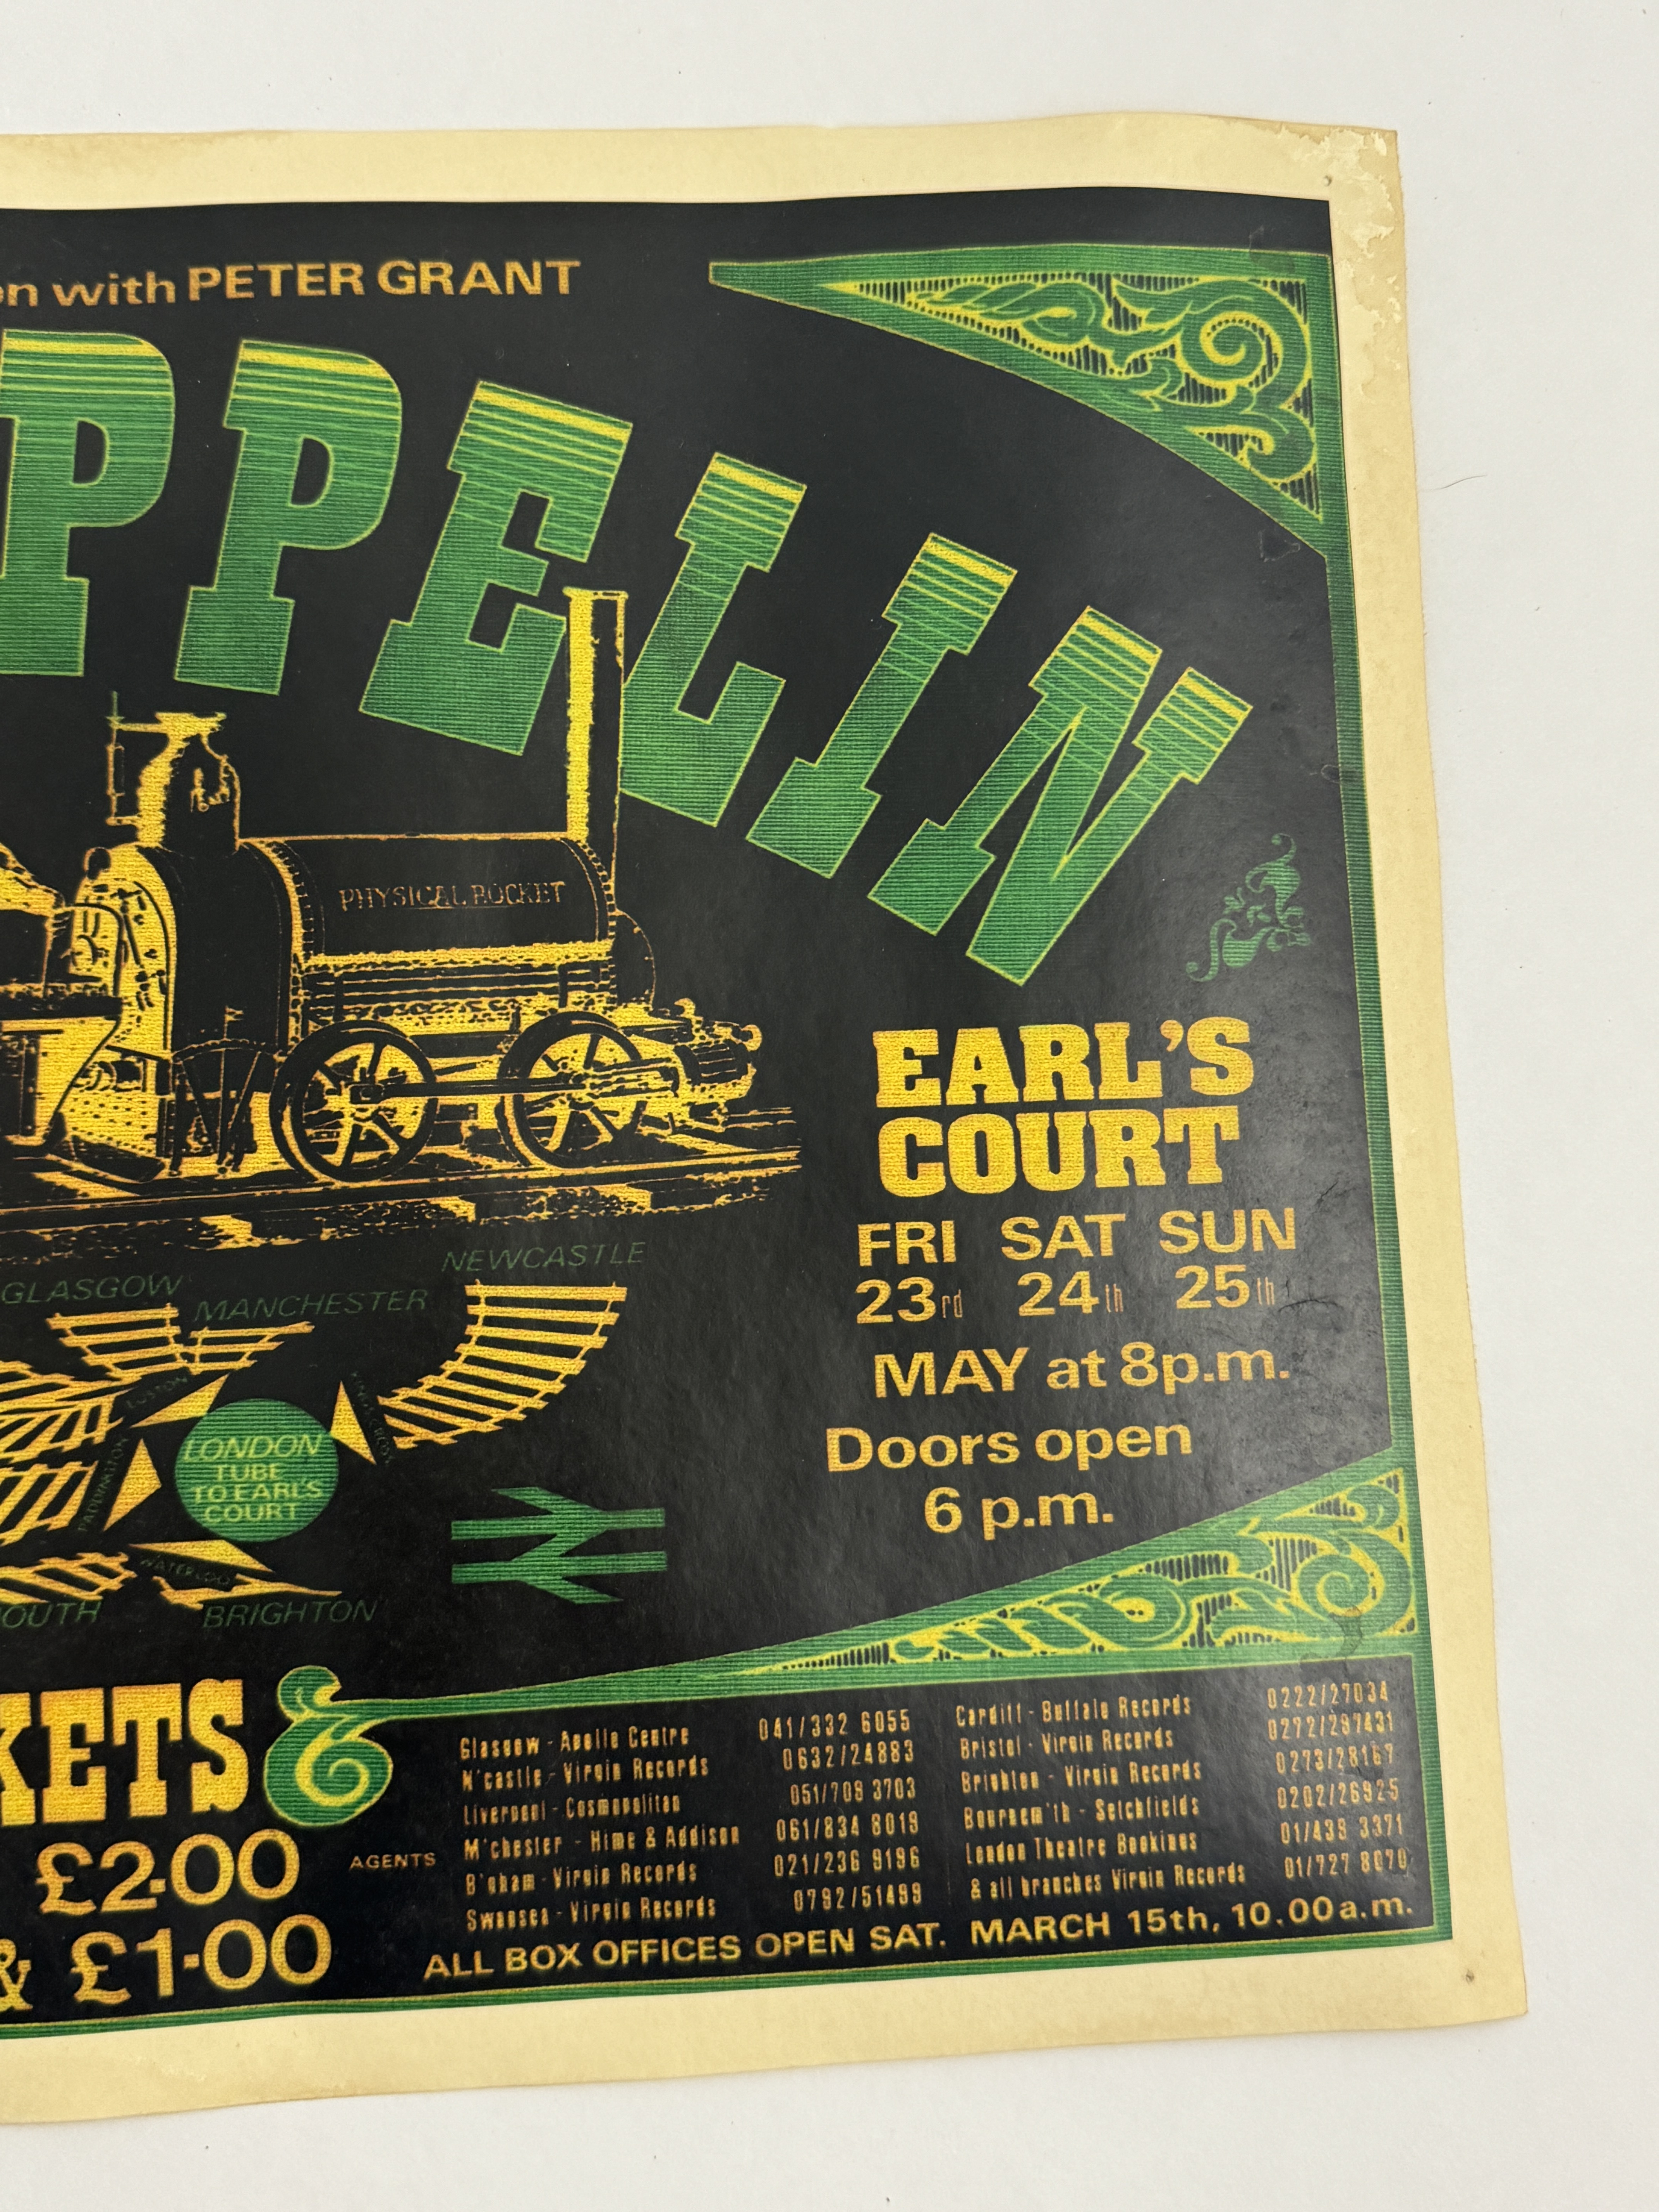 Led Zeppelin Concert Poster - Image 3 of 4